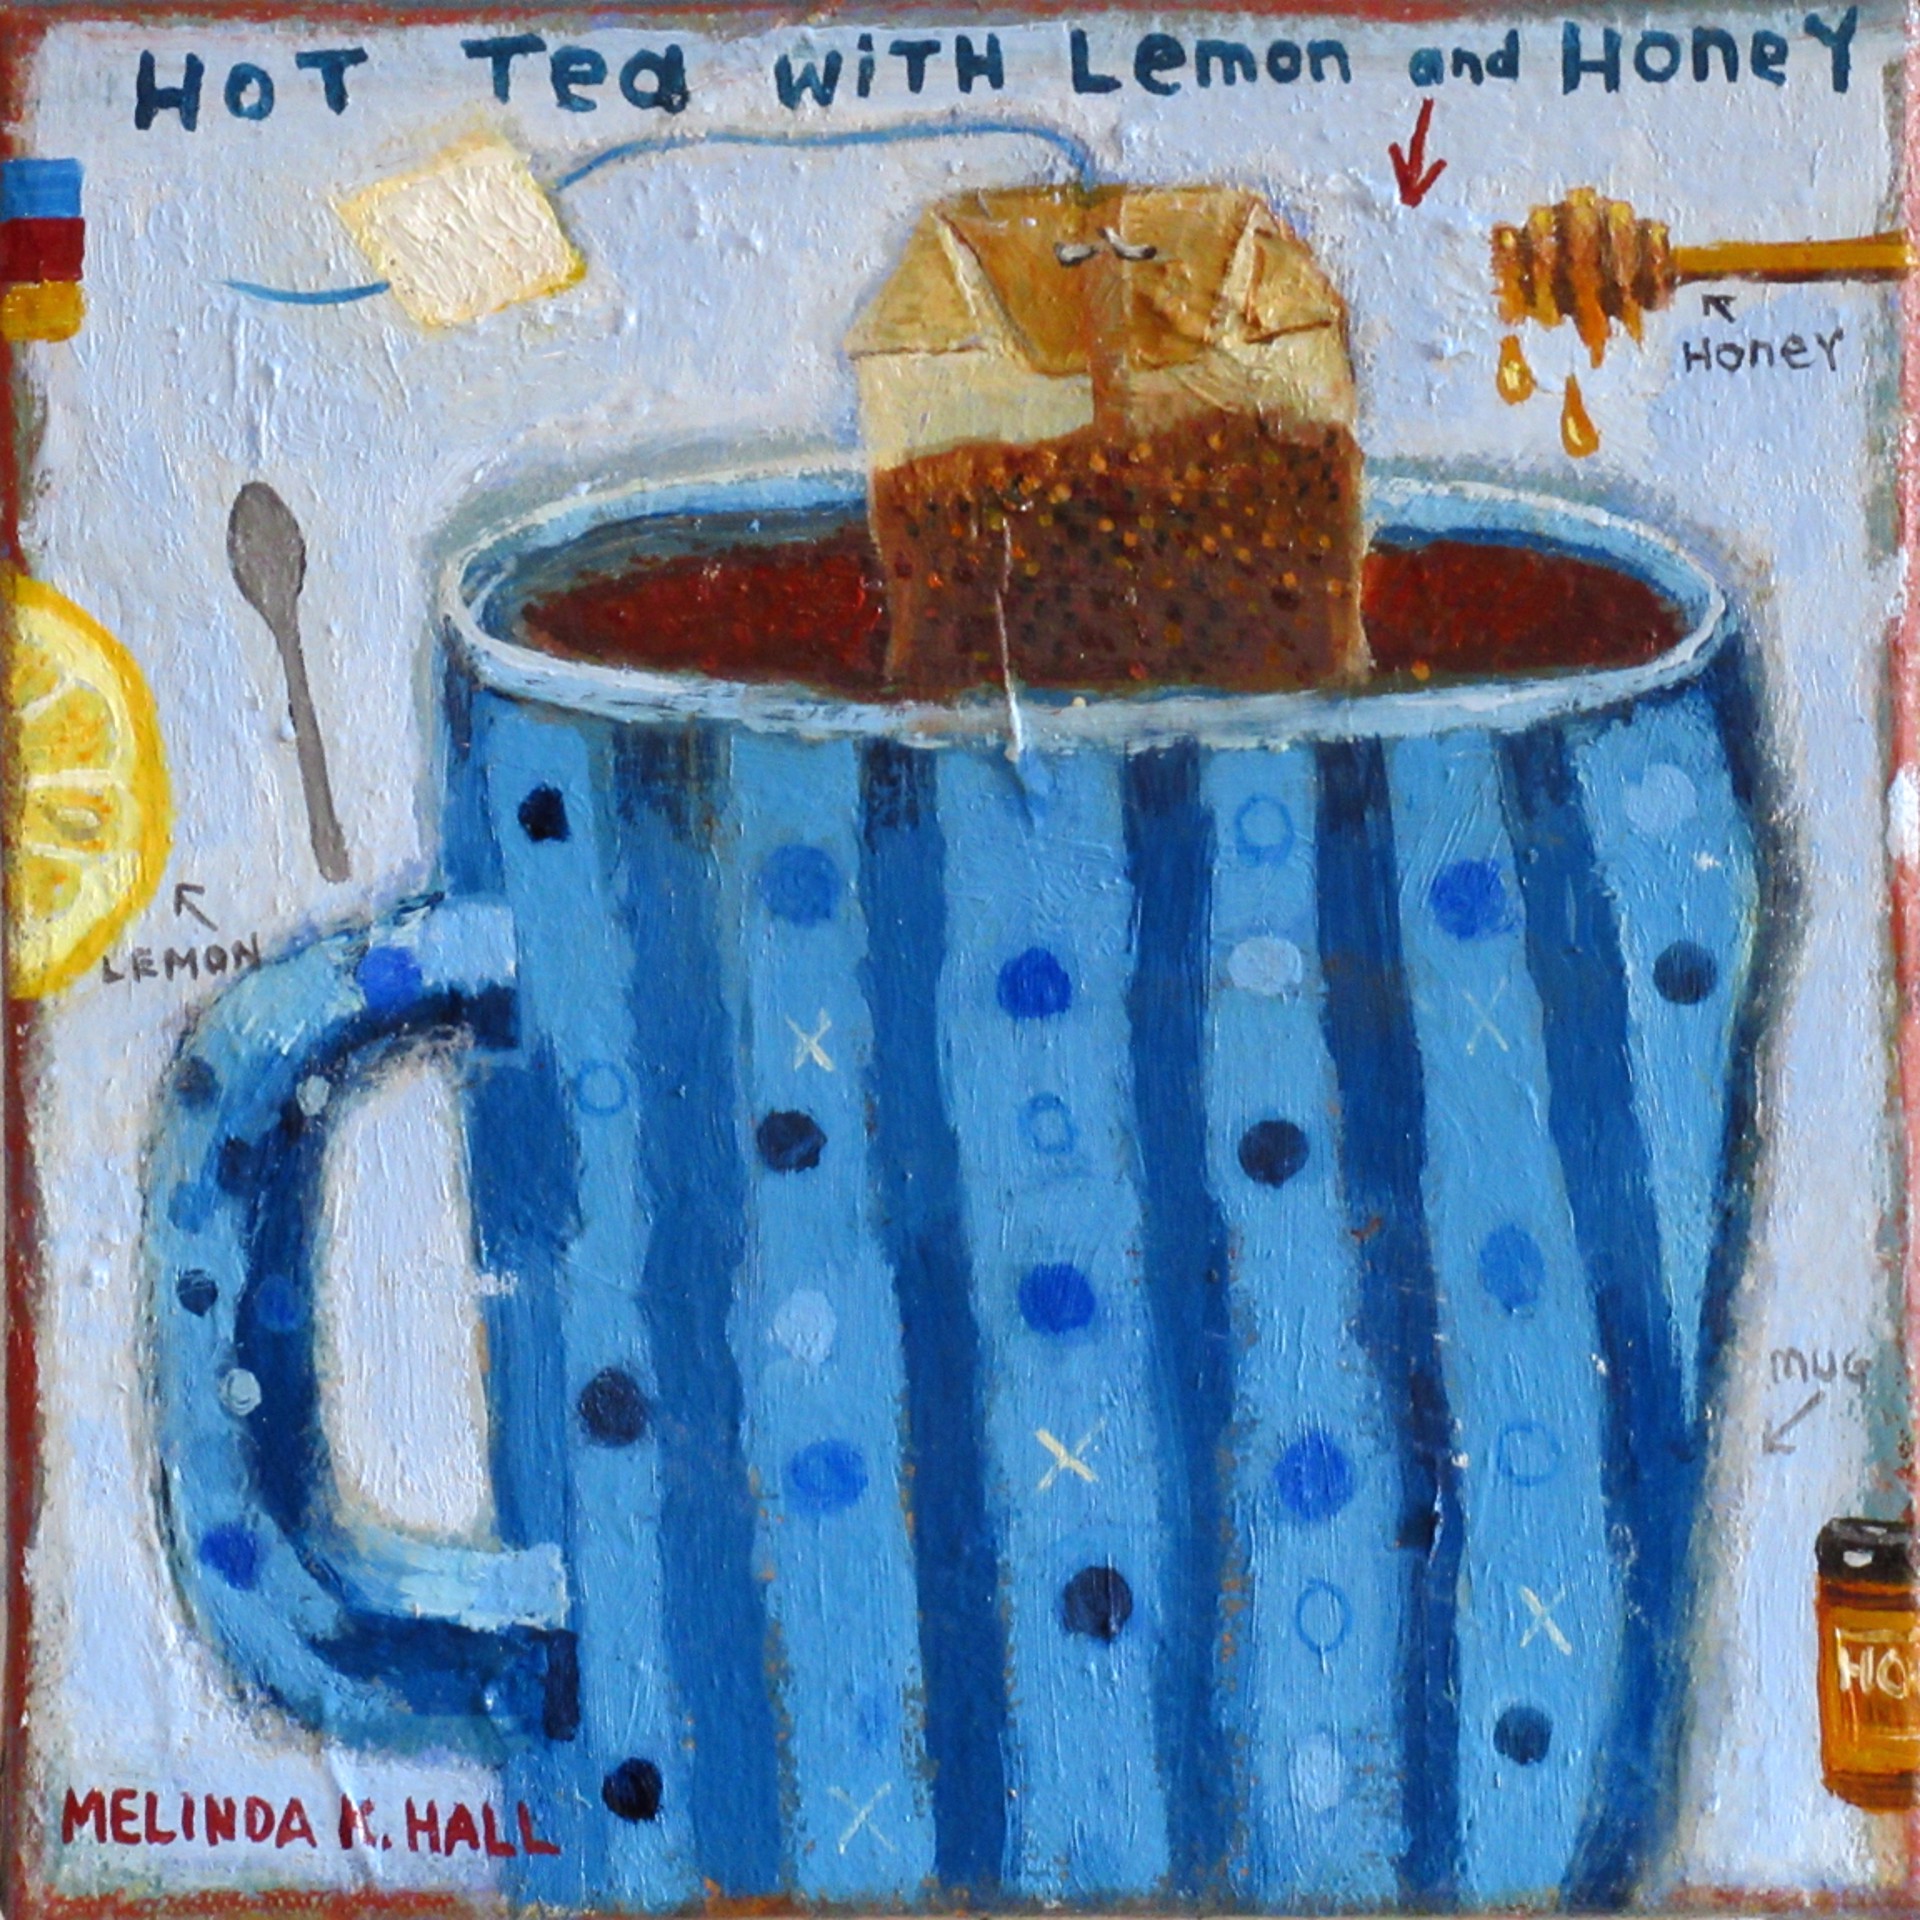 Hot Tea with Lemon and Honey by Melinda K. Hall